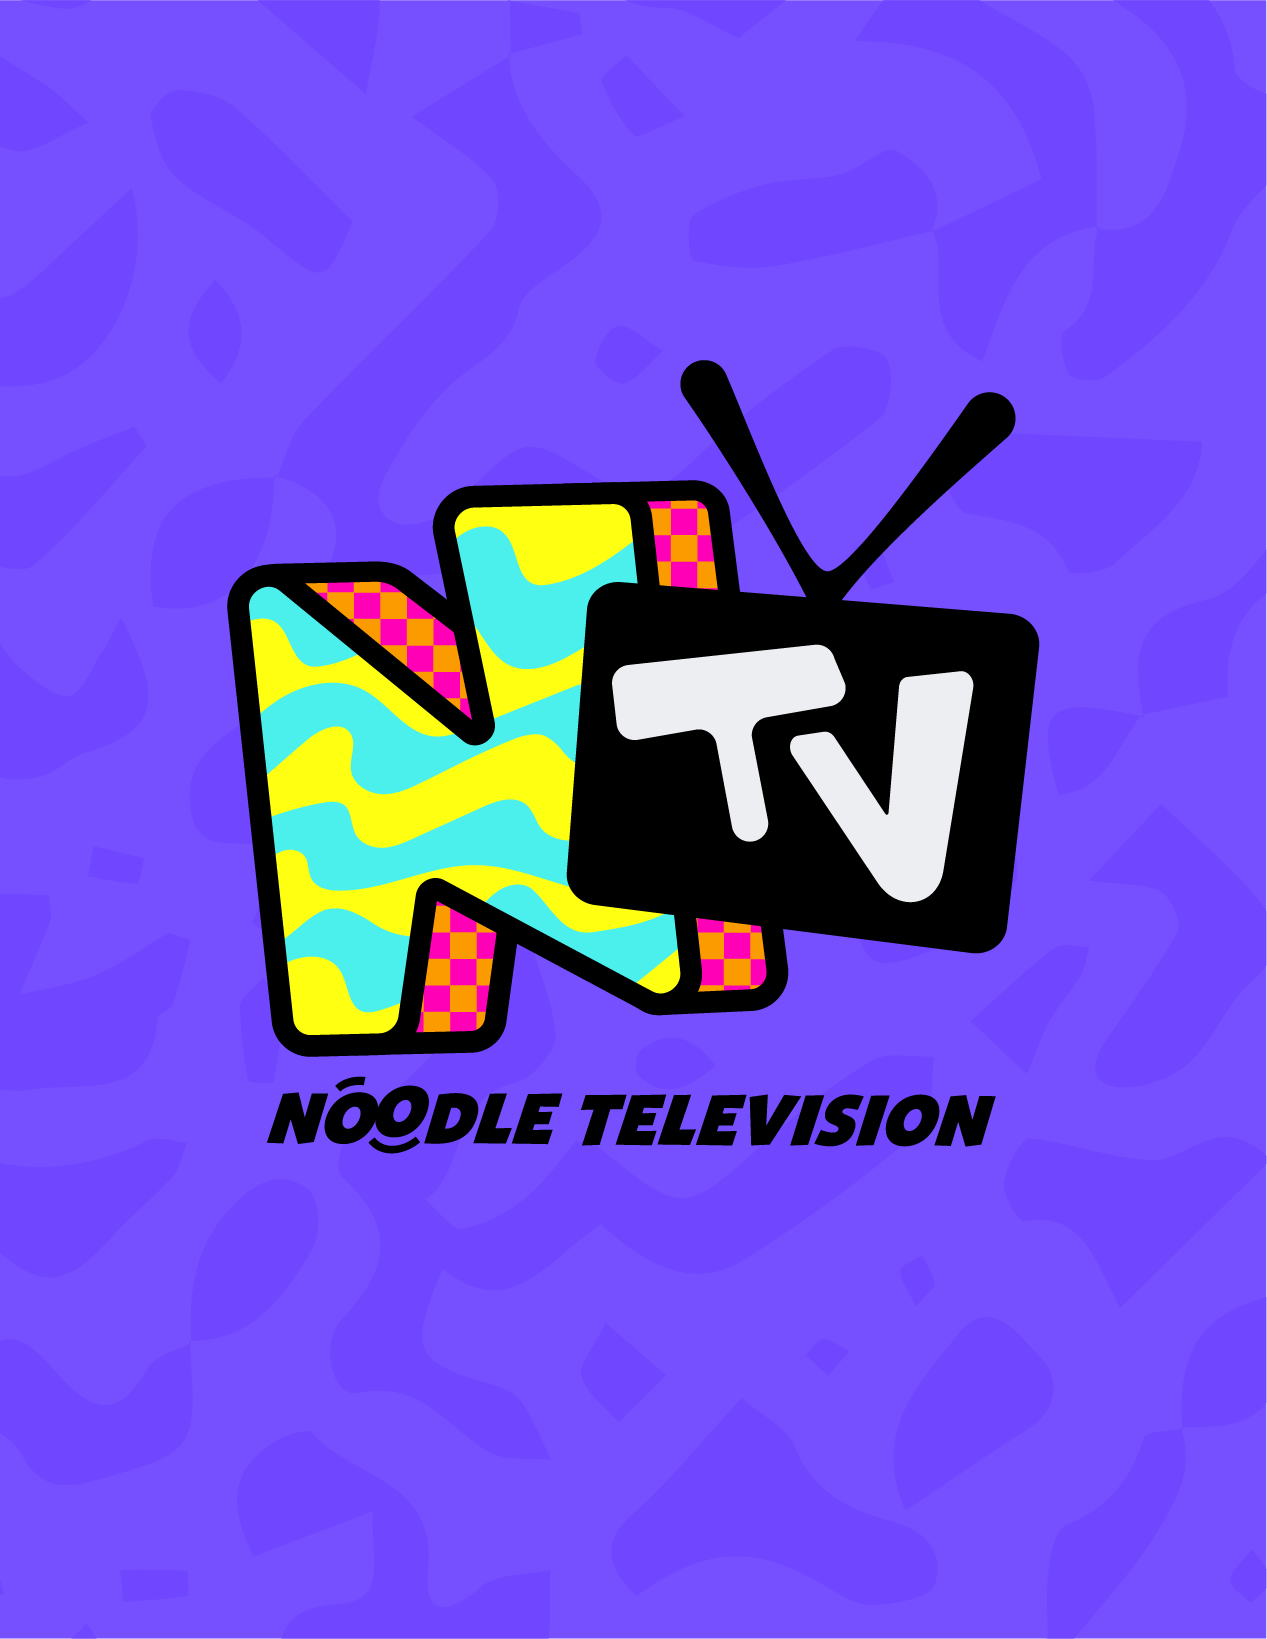 ntv-noodle-television